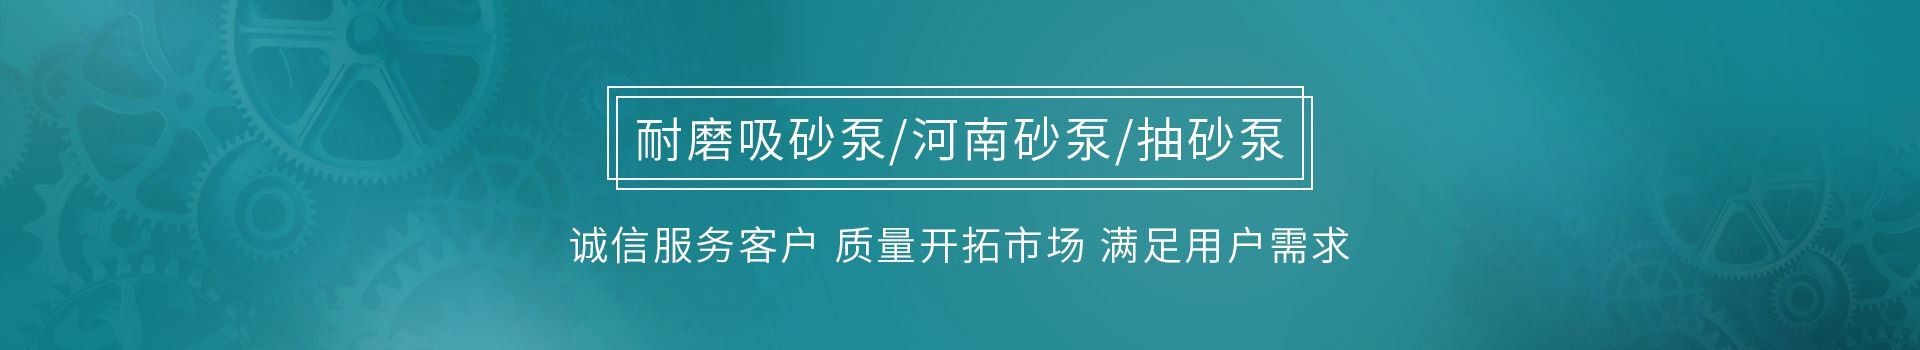 k8凯发(中国)app官方网站_image2301